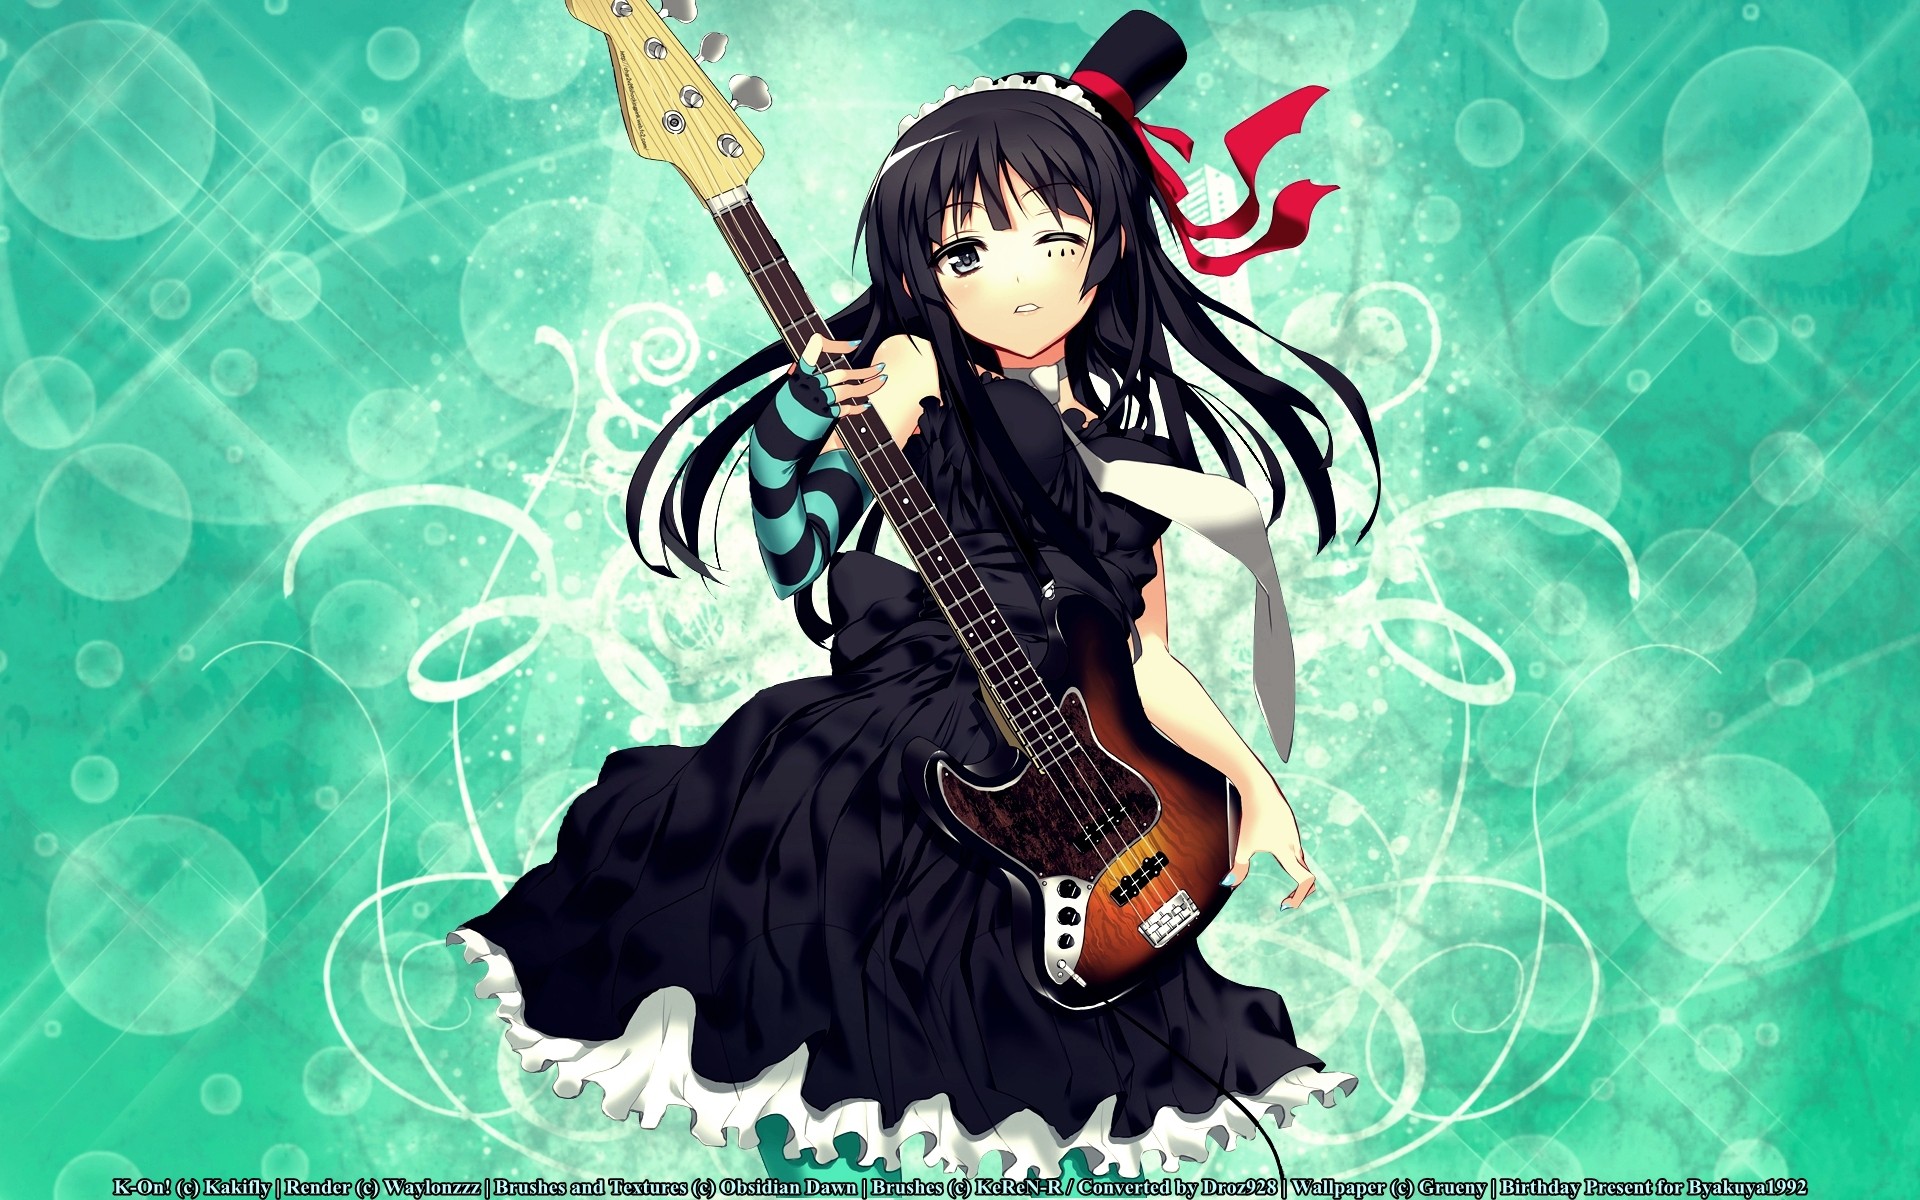 Anime 1920x1200 anime anime girls K-ON! Don't Say Lazy Akiyama Mio guitar musical instrument dress black dress hat women with hats dark hair one eye closed bass guitars